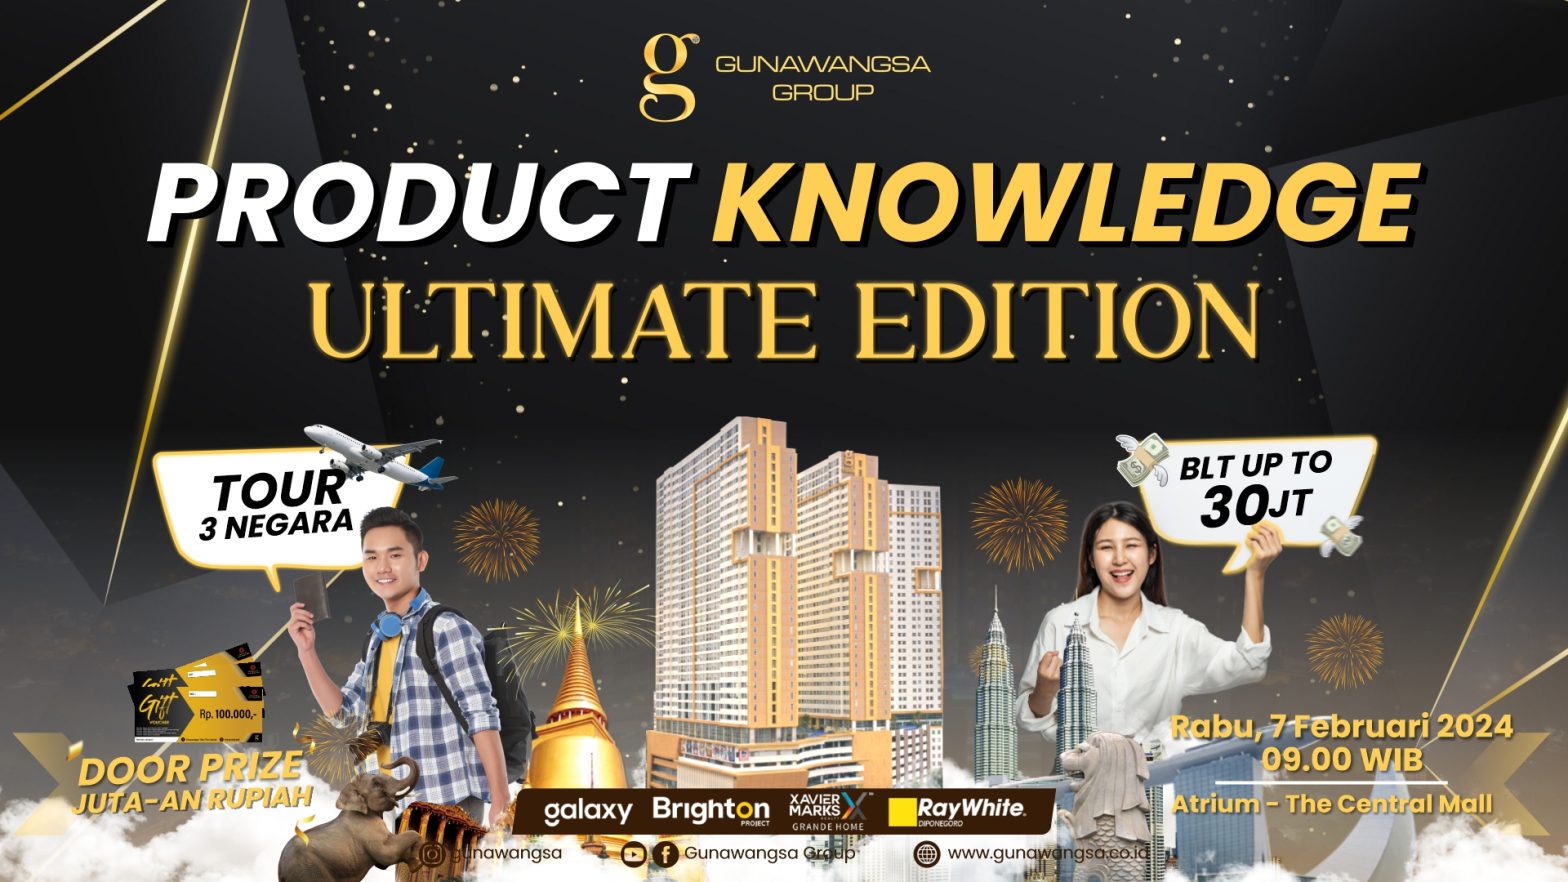 Product Knowledge Unit Terbaru di Gunawangsa Tidar Superblock, ULTIMATE EDITION.